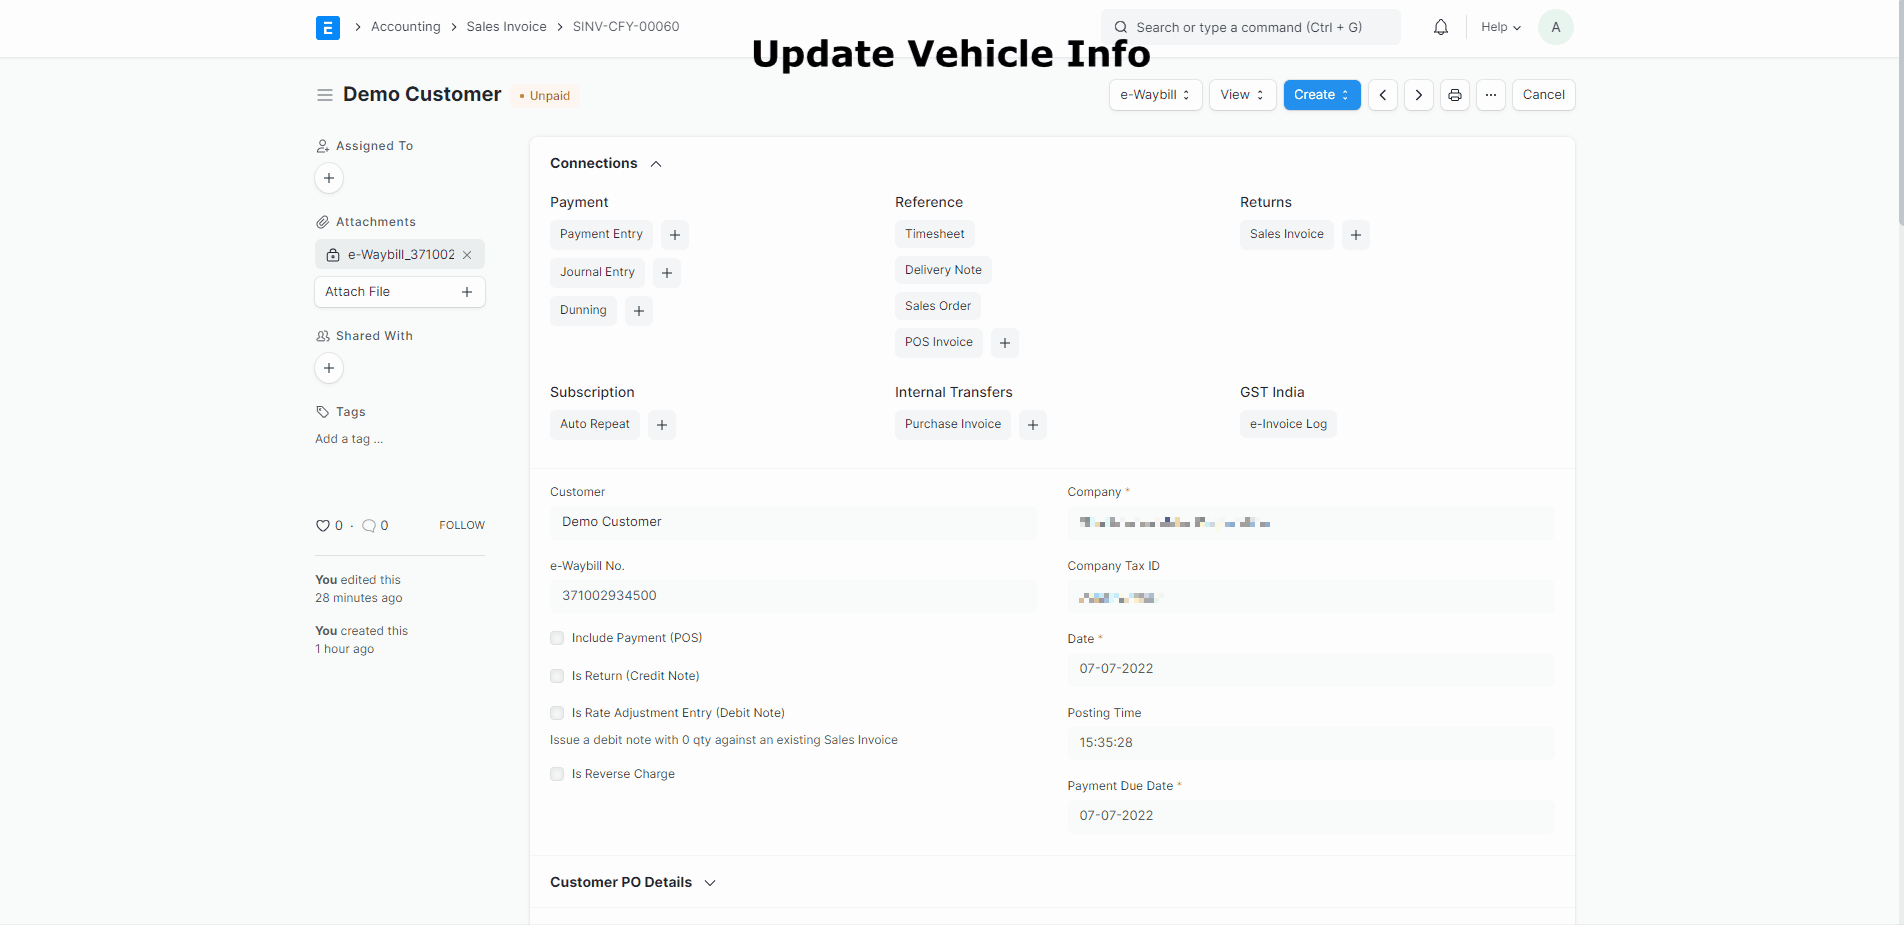 Update Vehicle Info